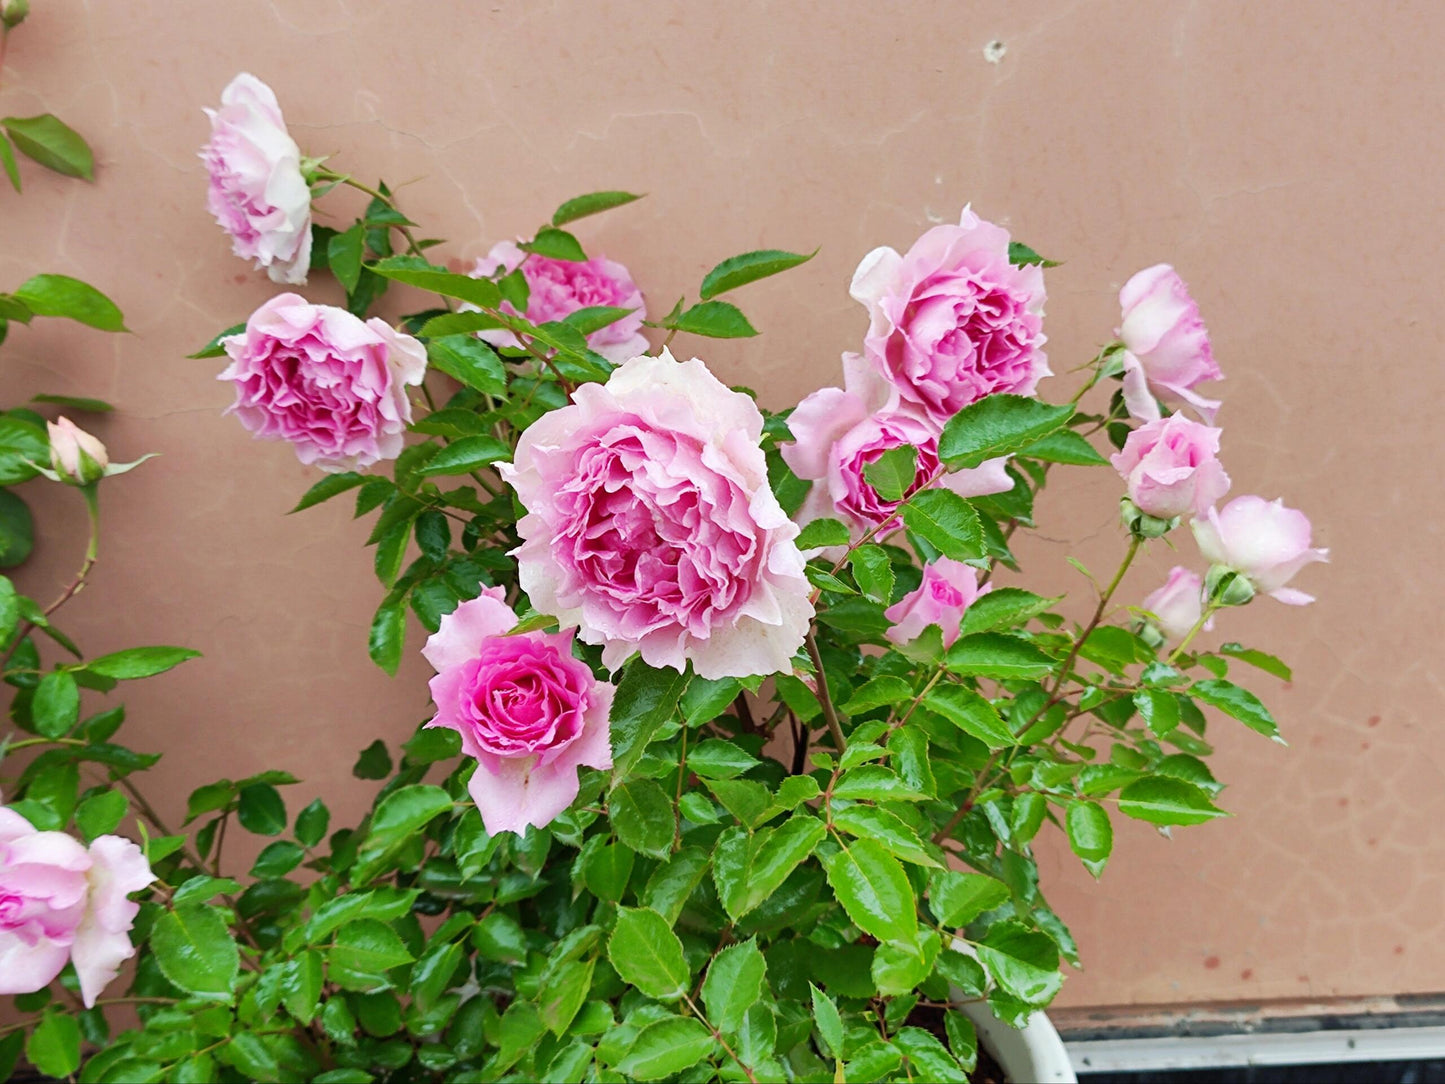 Rare Rose【Doniazade】- 1.5Gal OwnRoot LivePlant| Takunori Kimura-New Varieties 托妮莎德｜Pk Scheherazade| Peony Rosa| Redolent| 粉天方夜谭| Less Thorns